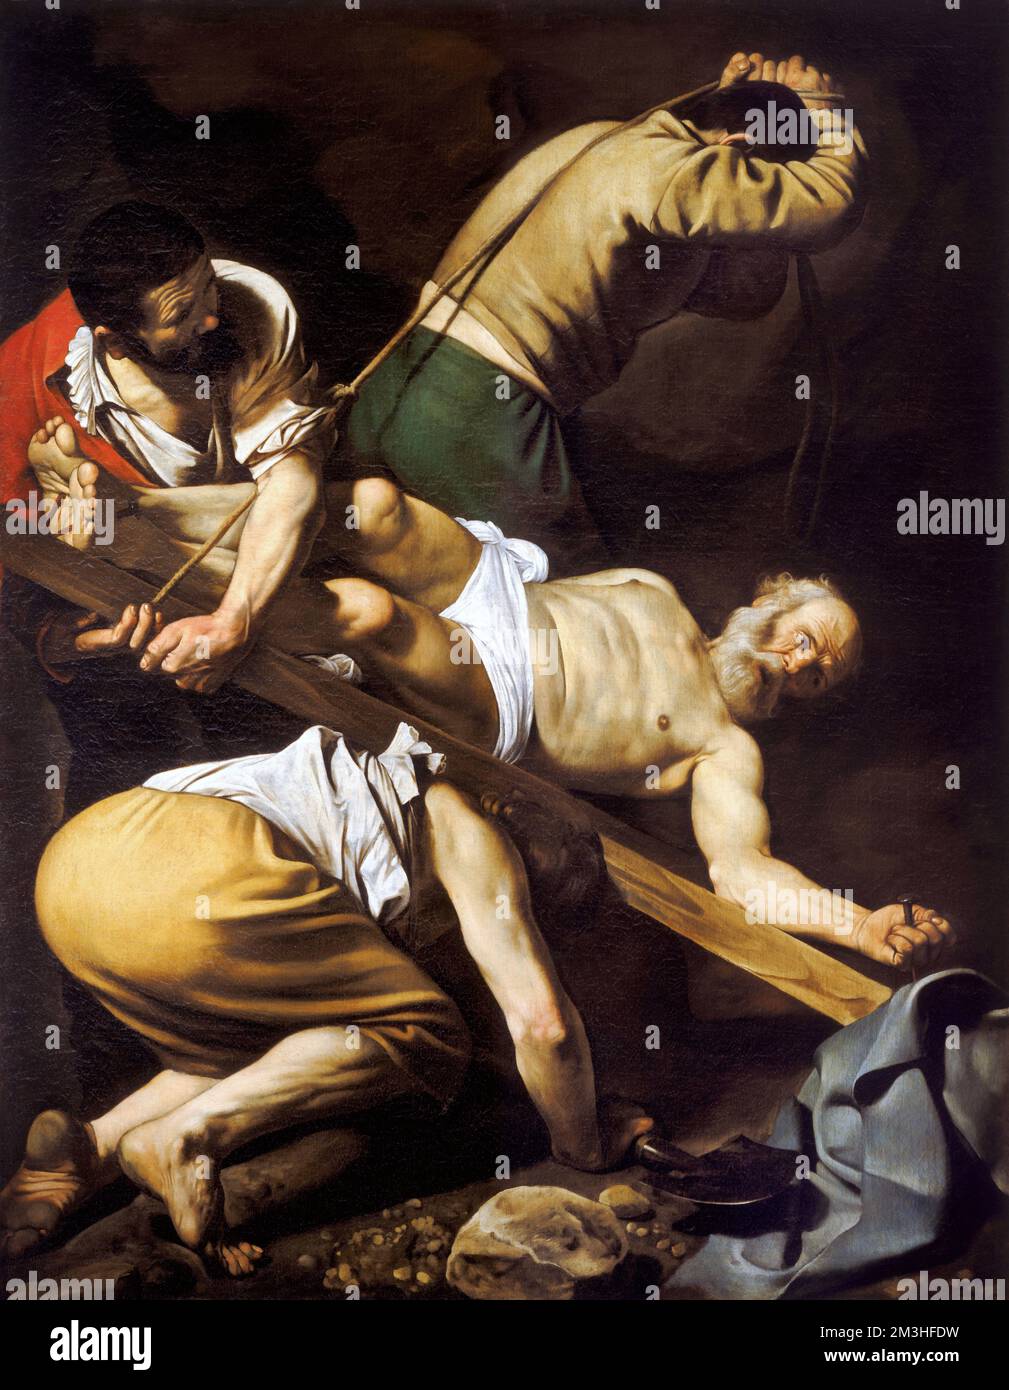 Michelangelo Merisi da Caravaggio (1571-1610) Title Crucifixion of St. Peter Date1600 Edit this at Wikidata Stock Photo